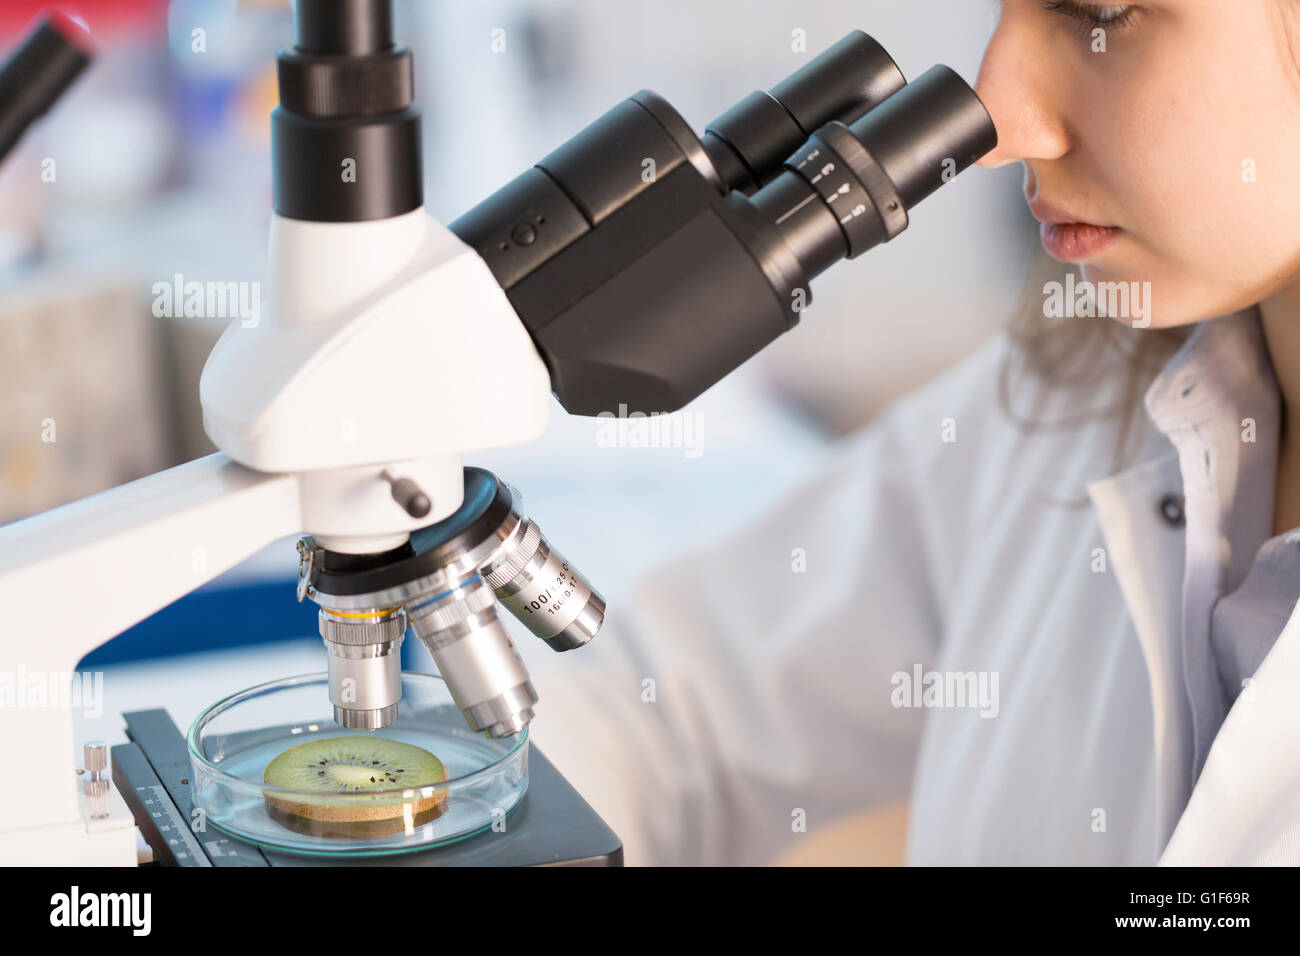 MODEL RELEASED. Female lab technician using microscope to study kiwi. Stock Photo